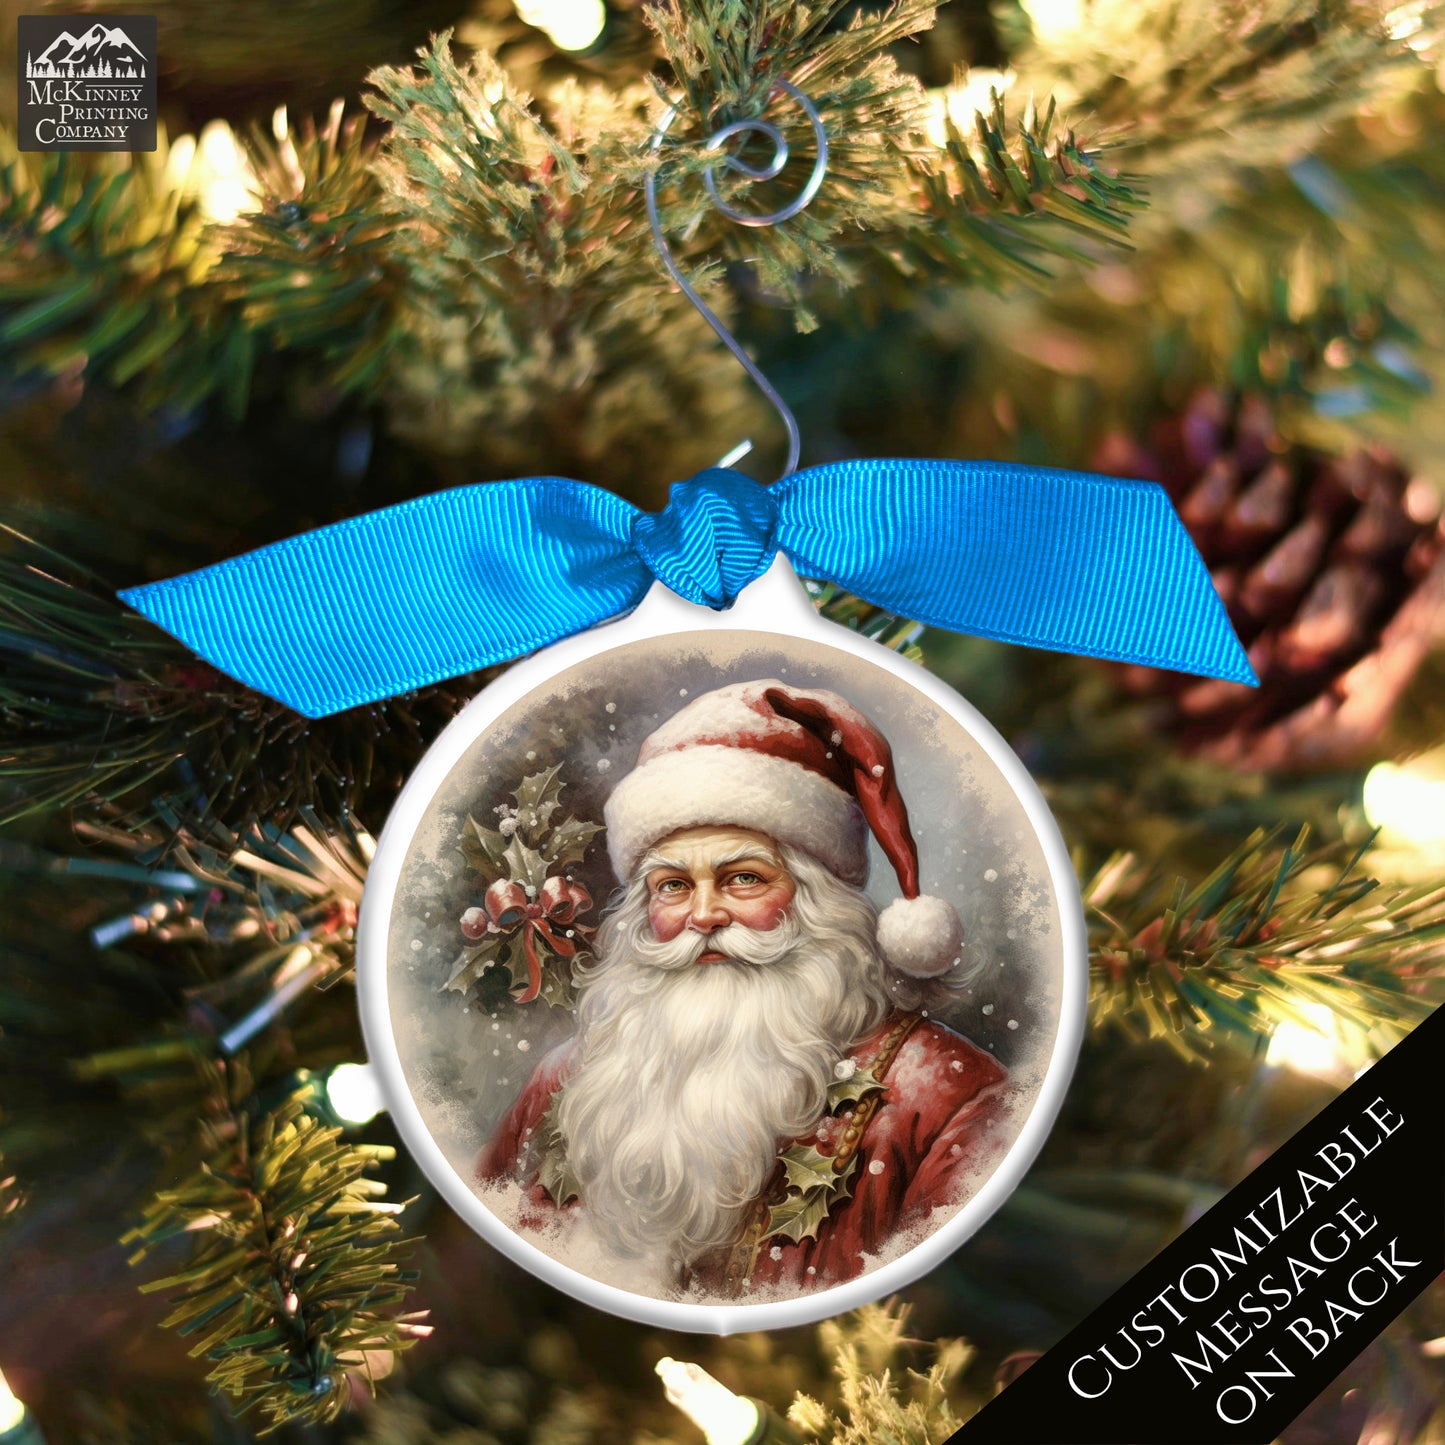 Victorian Christmas Ornaments - Vintage Santa, Shabby Chic Décor